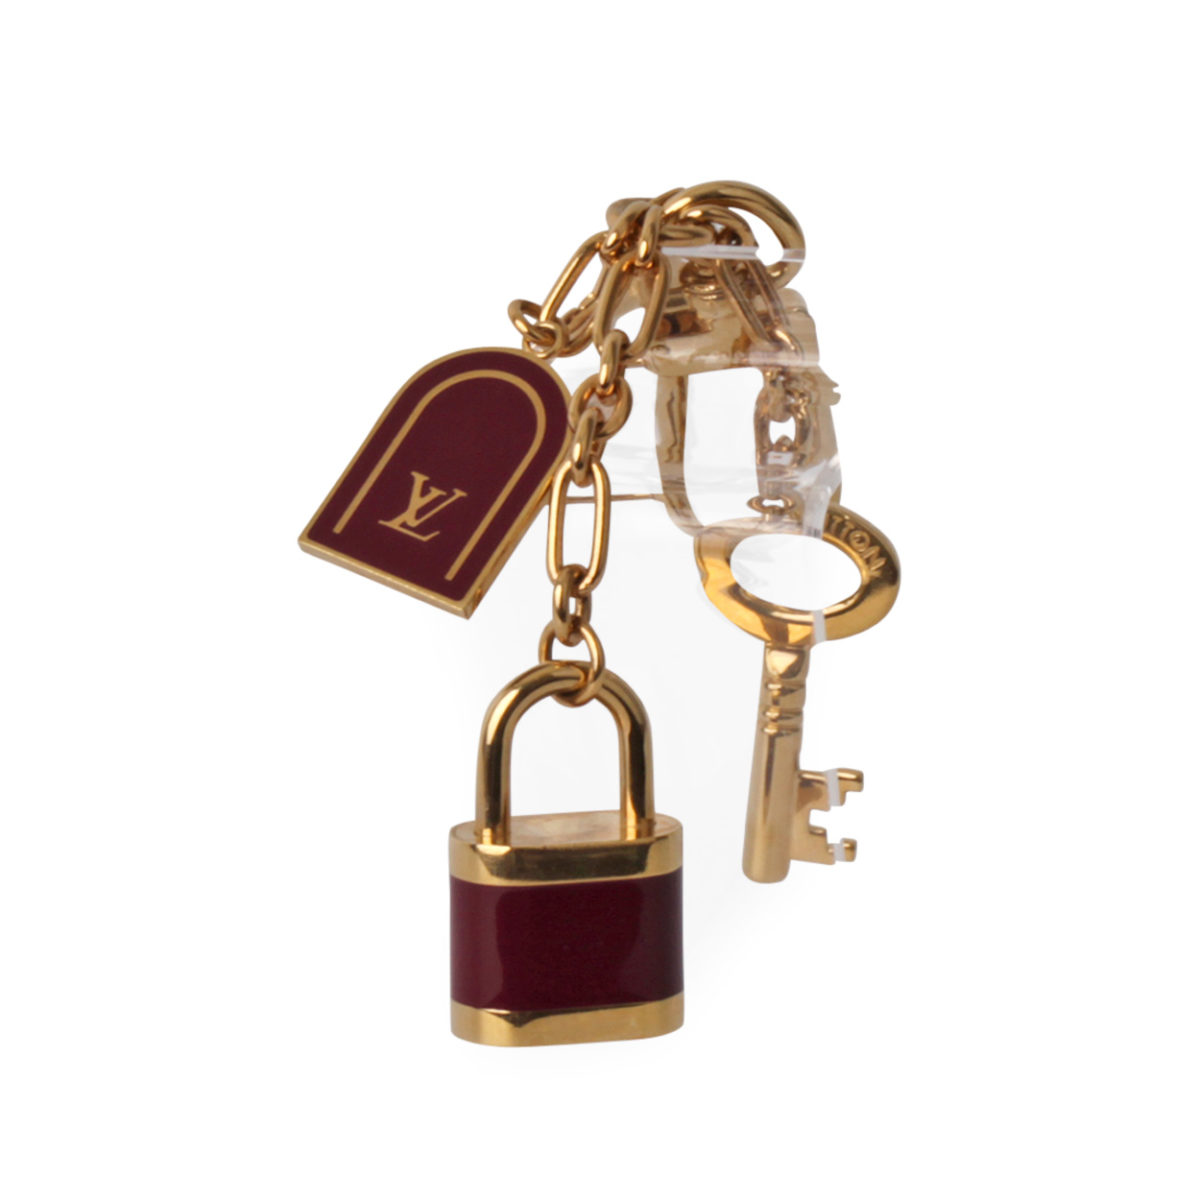 Lv Inlay Bag Charm & Key Holder Other